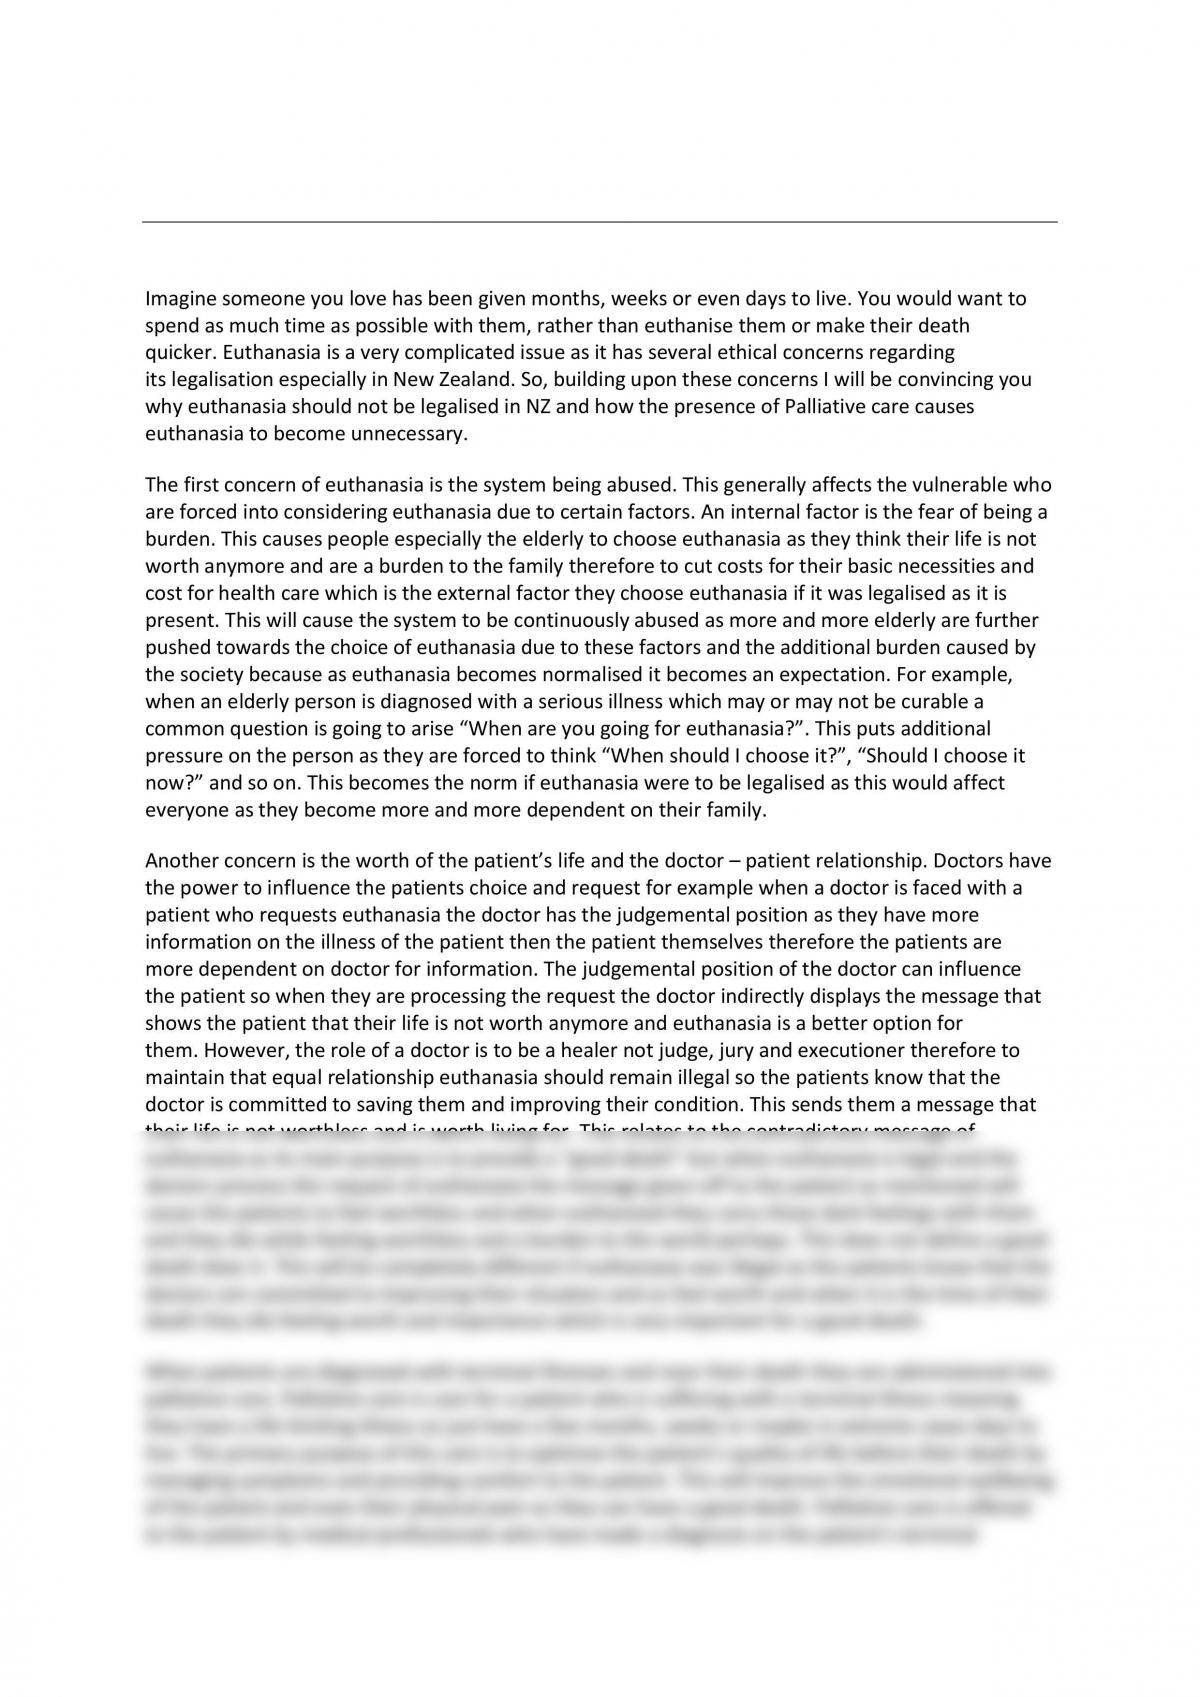 NCEA level 2 Speech Transcript - Page 1